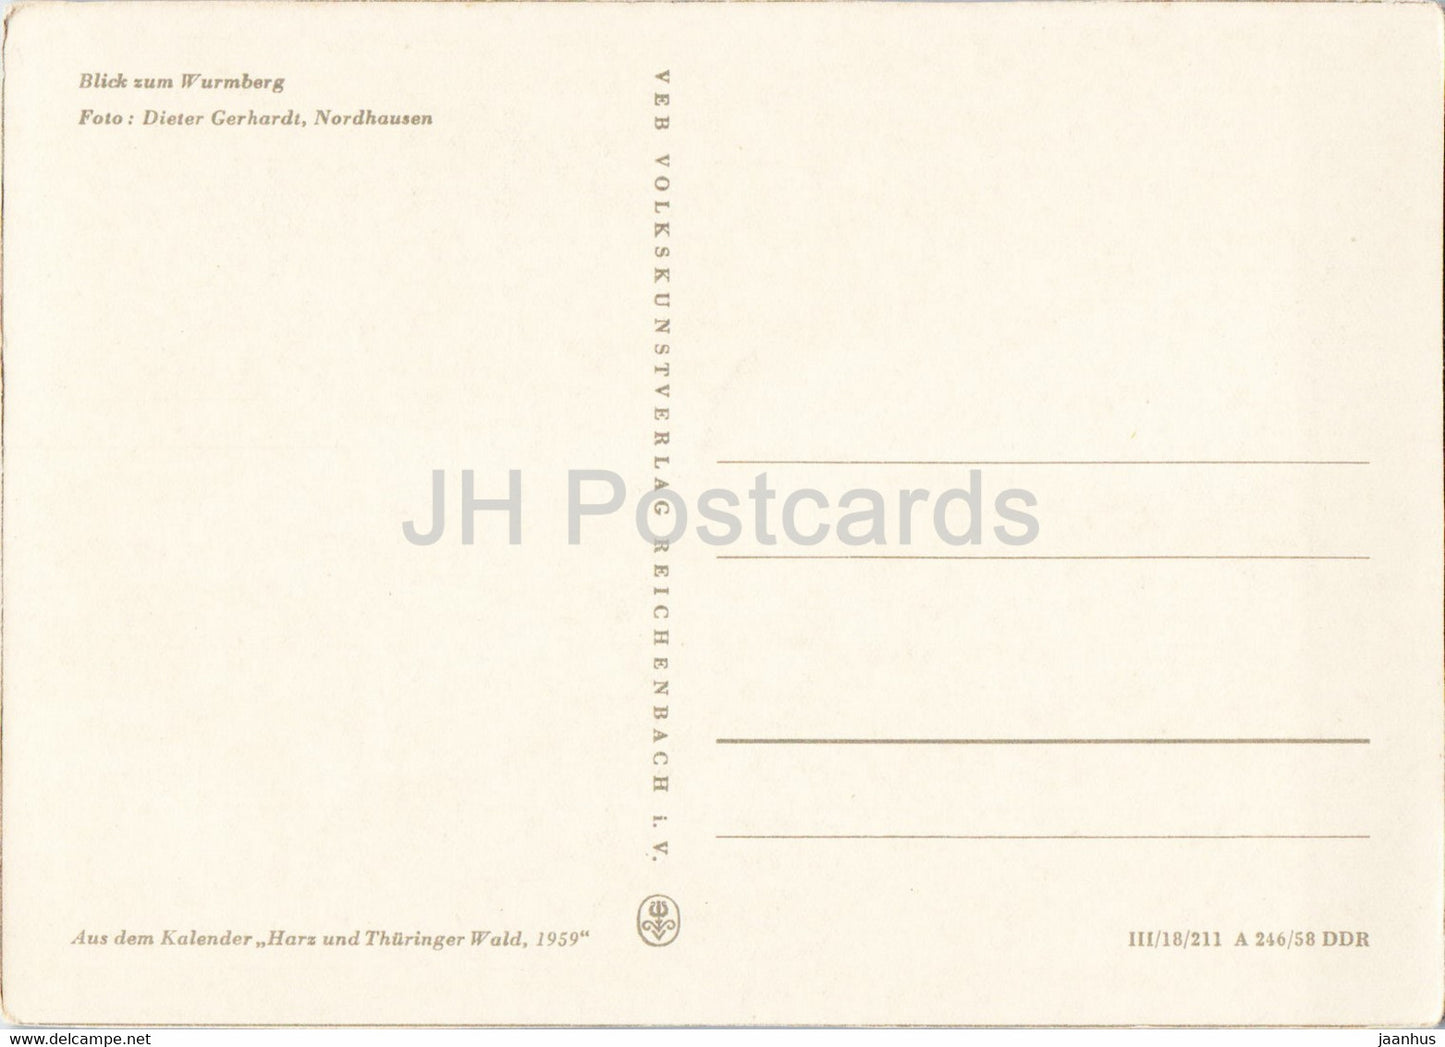 Blick zum Wurmberg - old postcard - 1959 - Germany DDR - unused